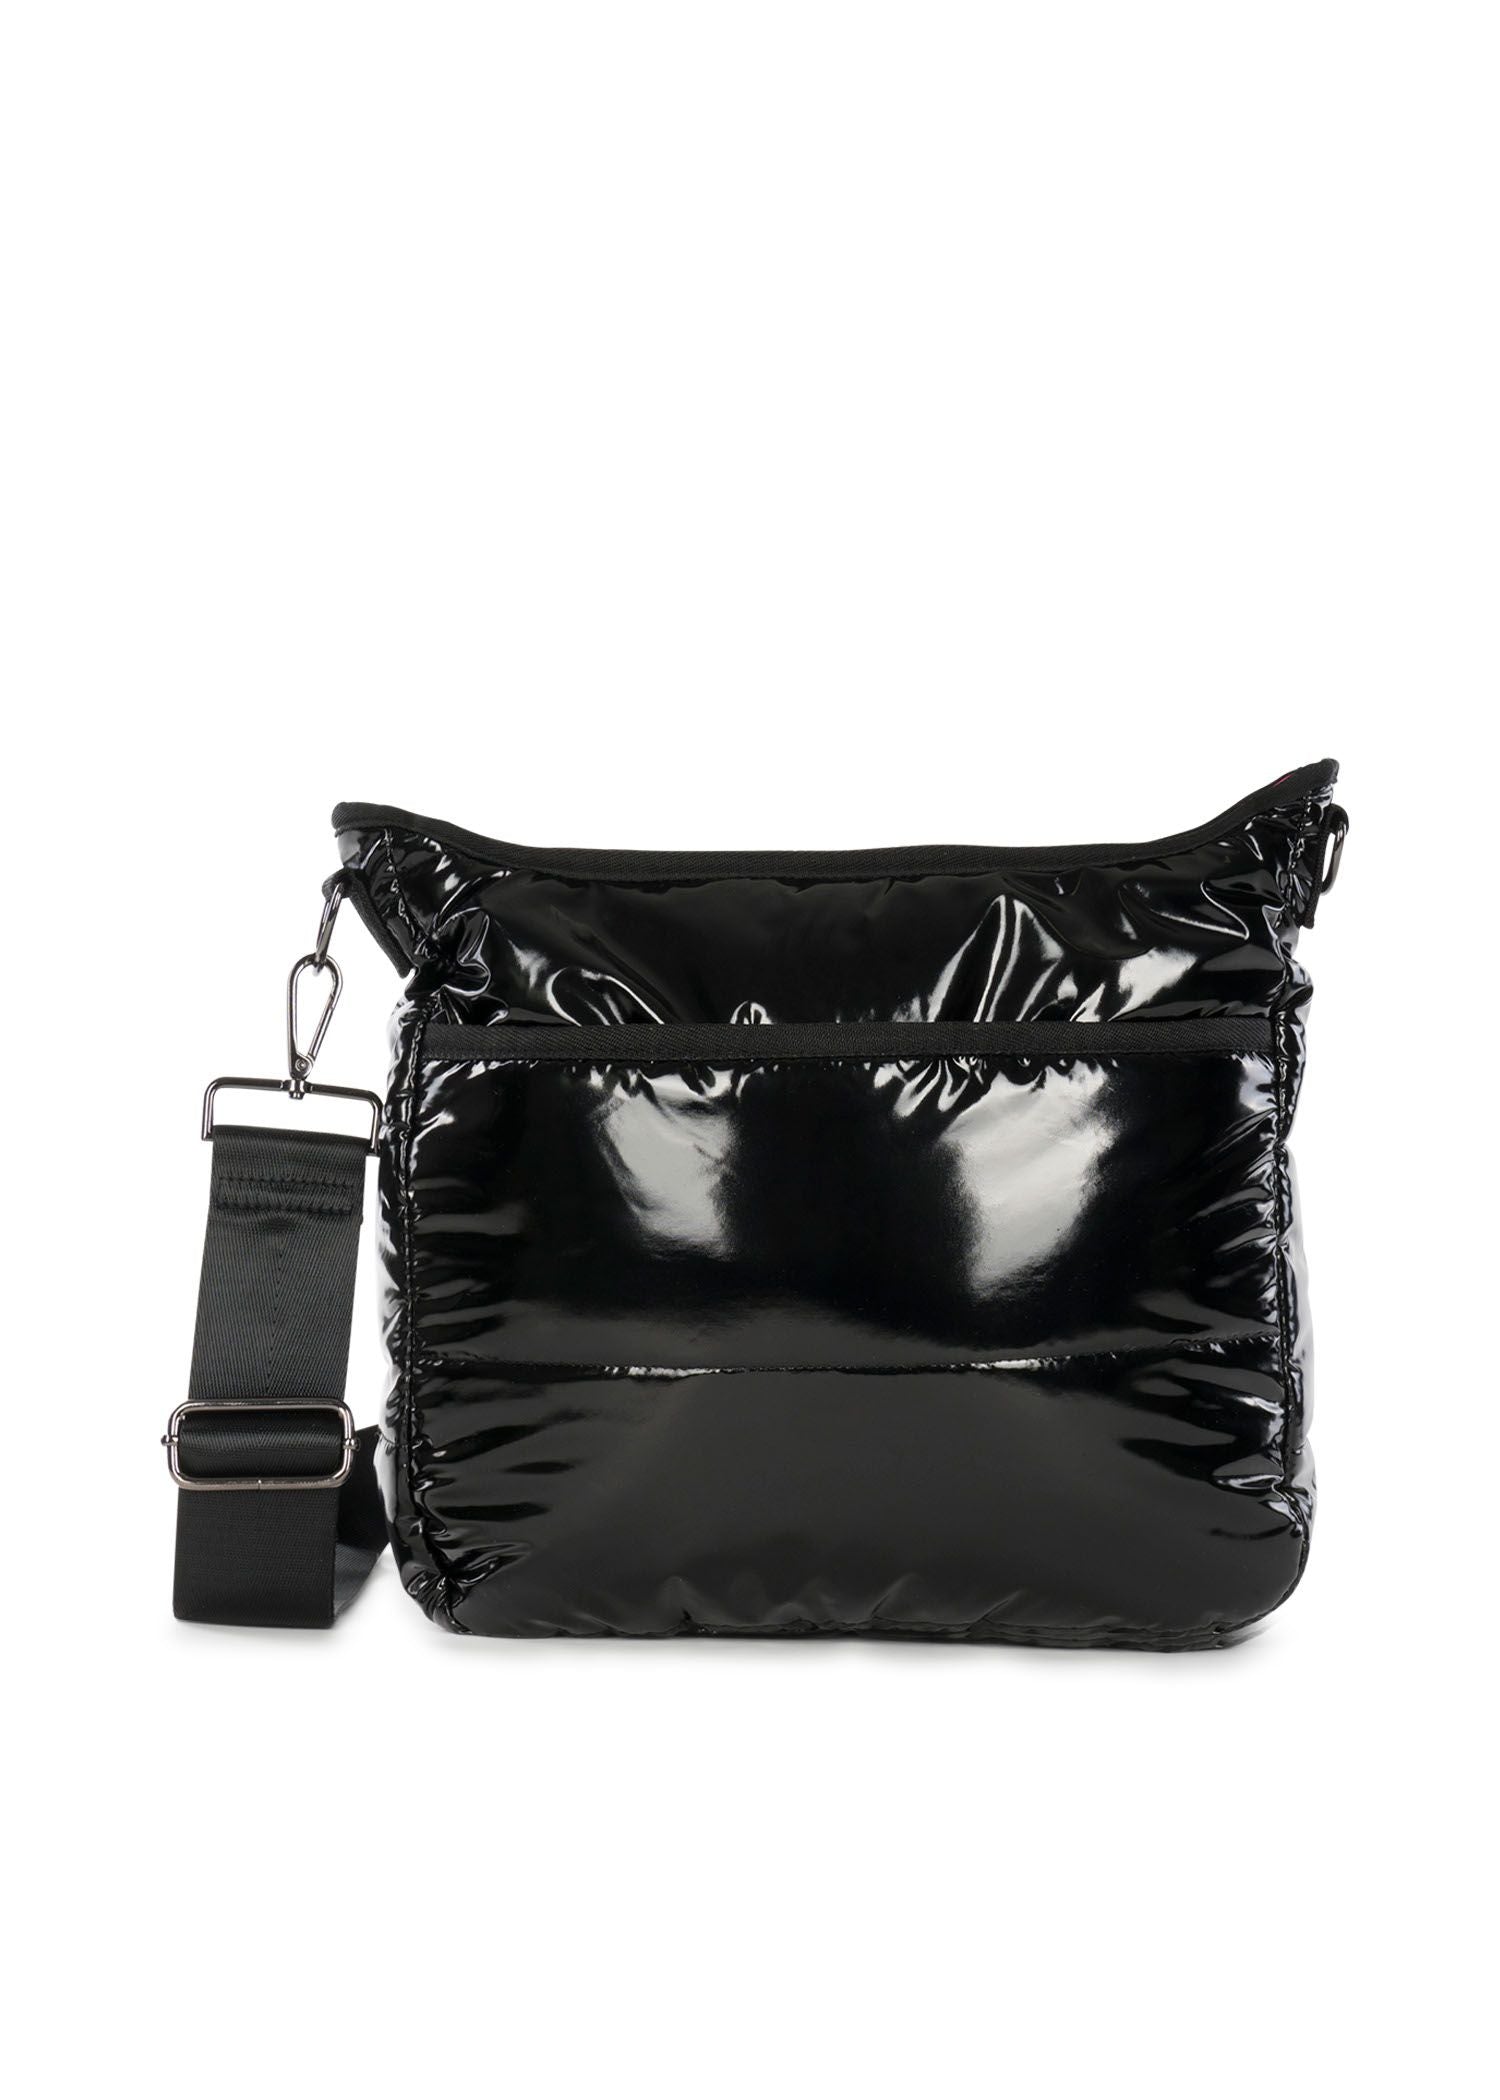 Haute Shore Women's Perri Noir Puffer Crossbody Bag, Black Patent, One_Size